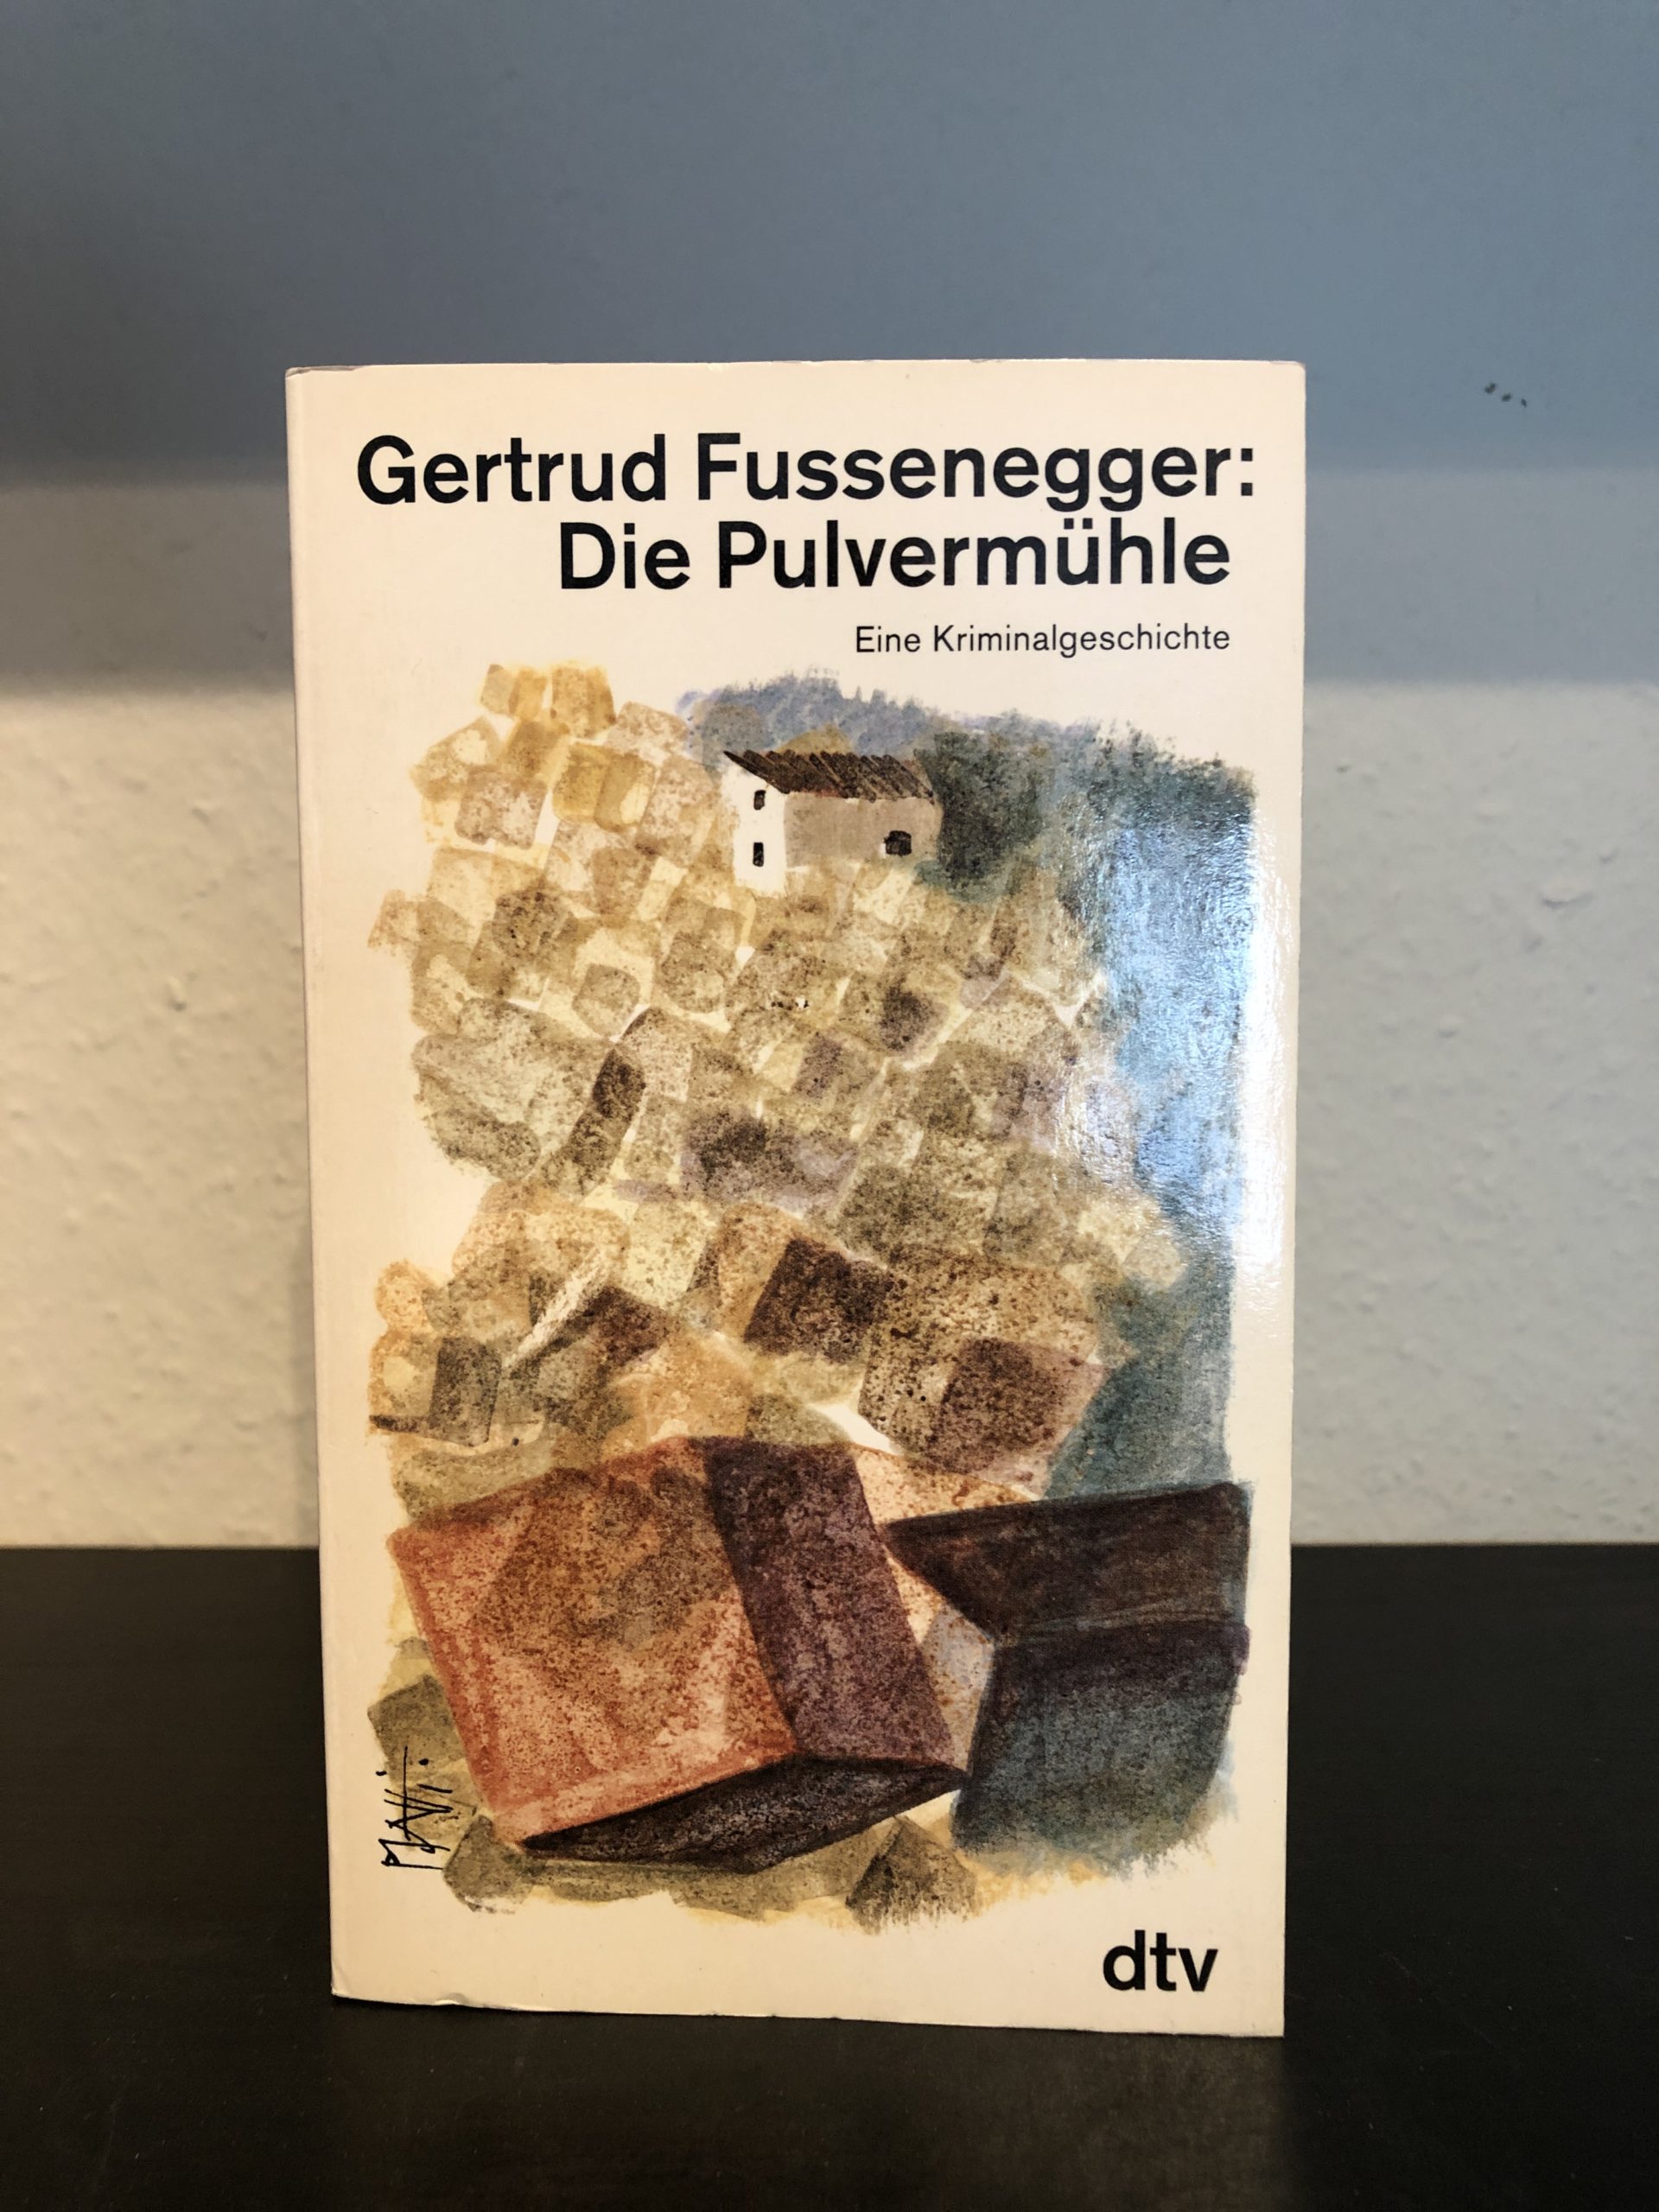 Die Pulvermühle - Gertrud Fussenegger-image